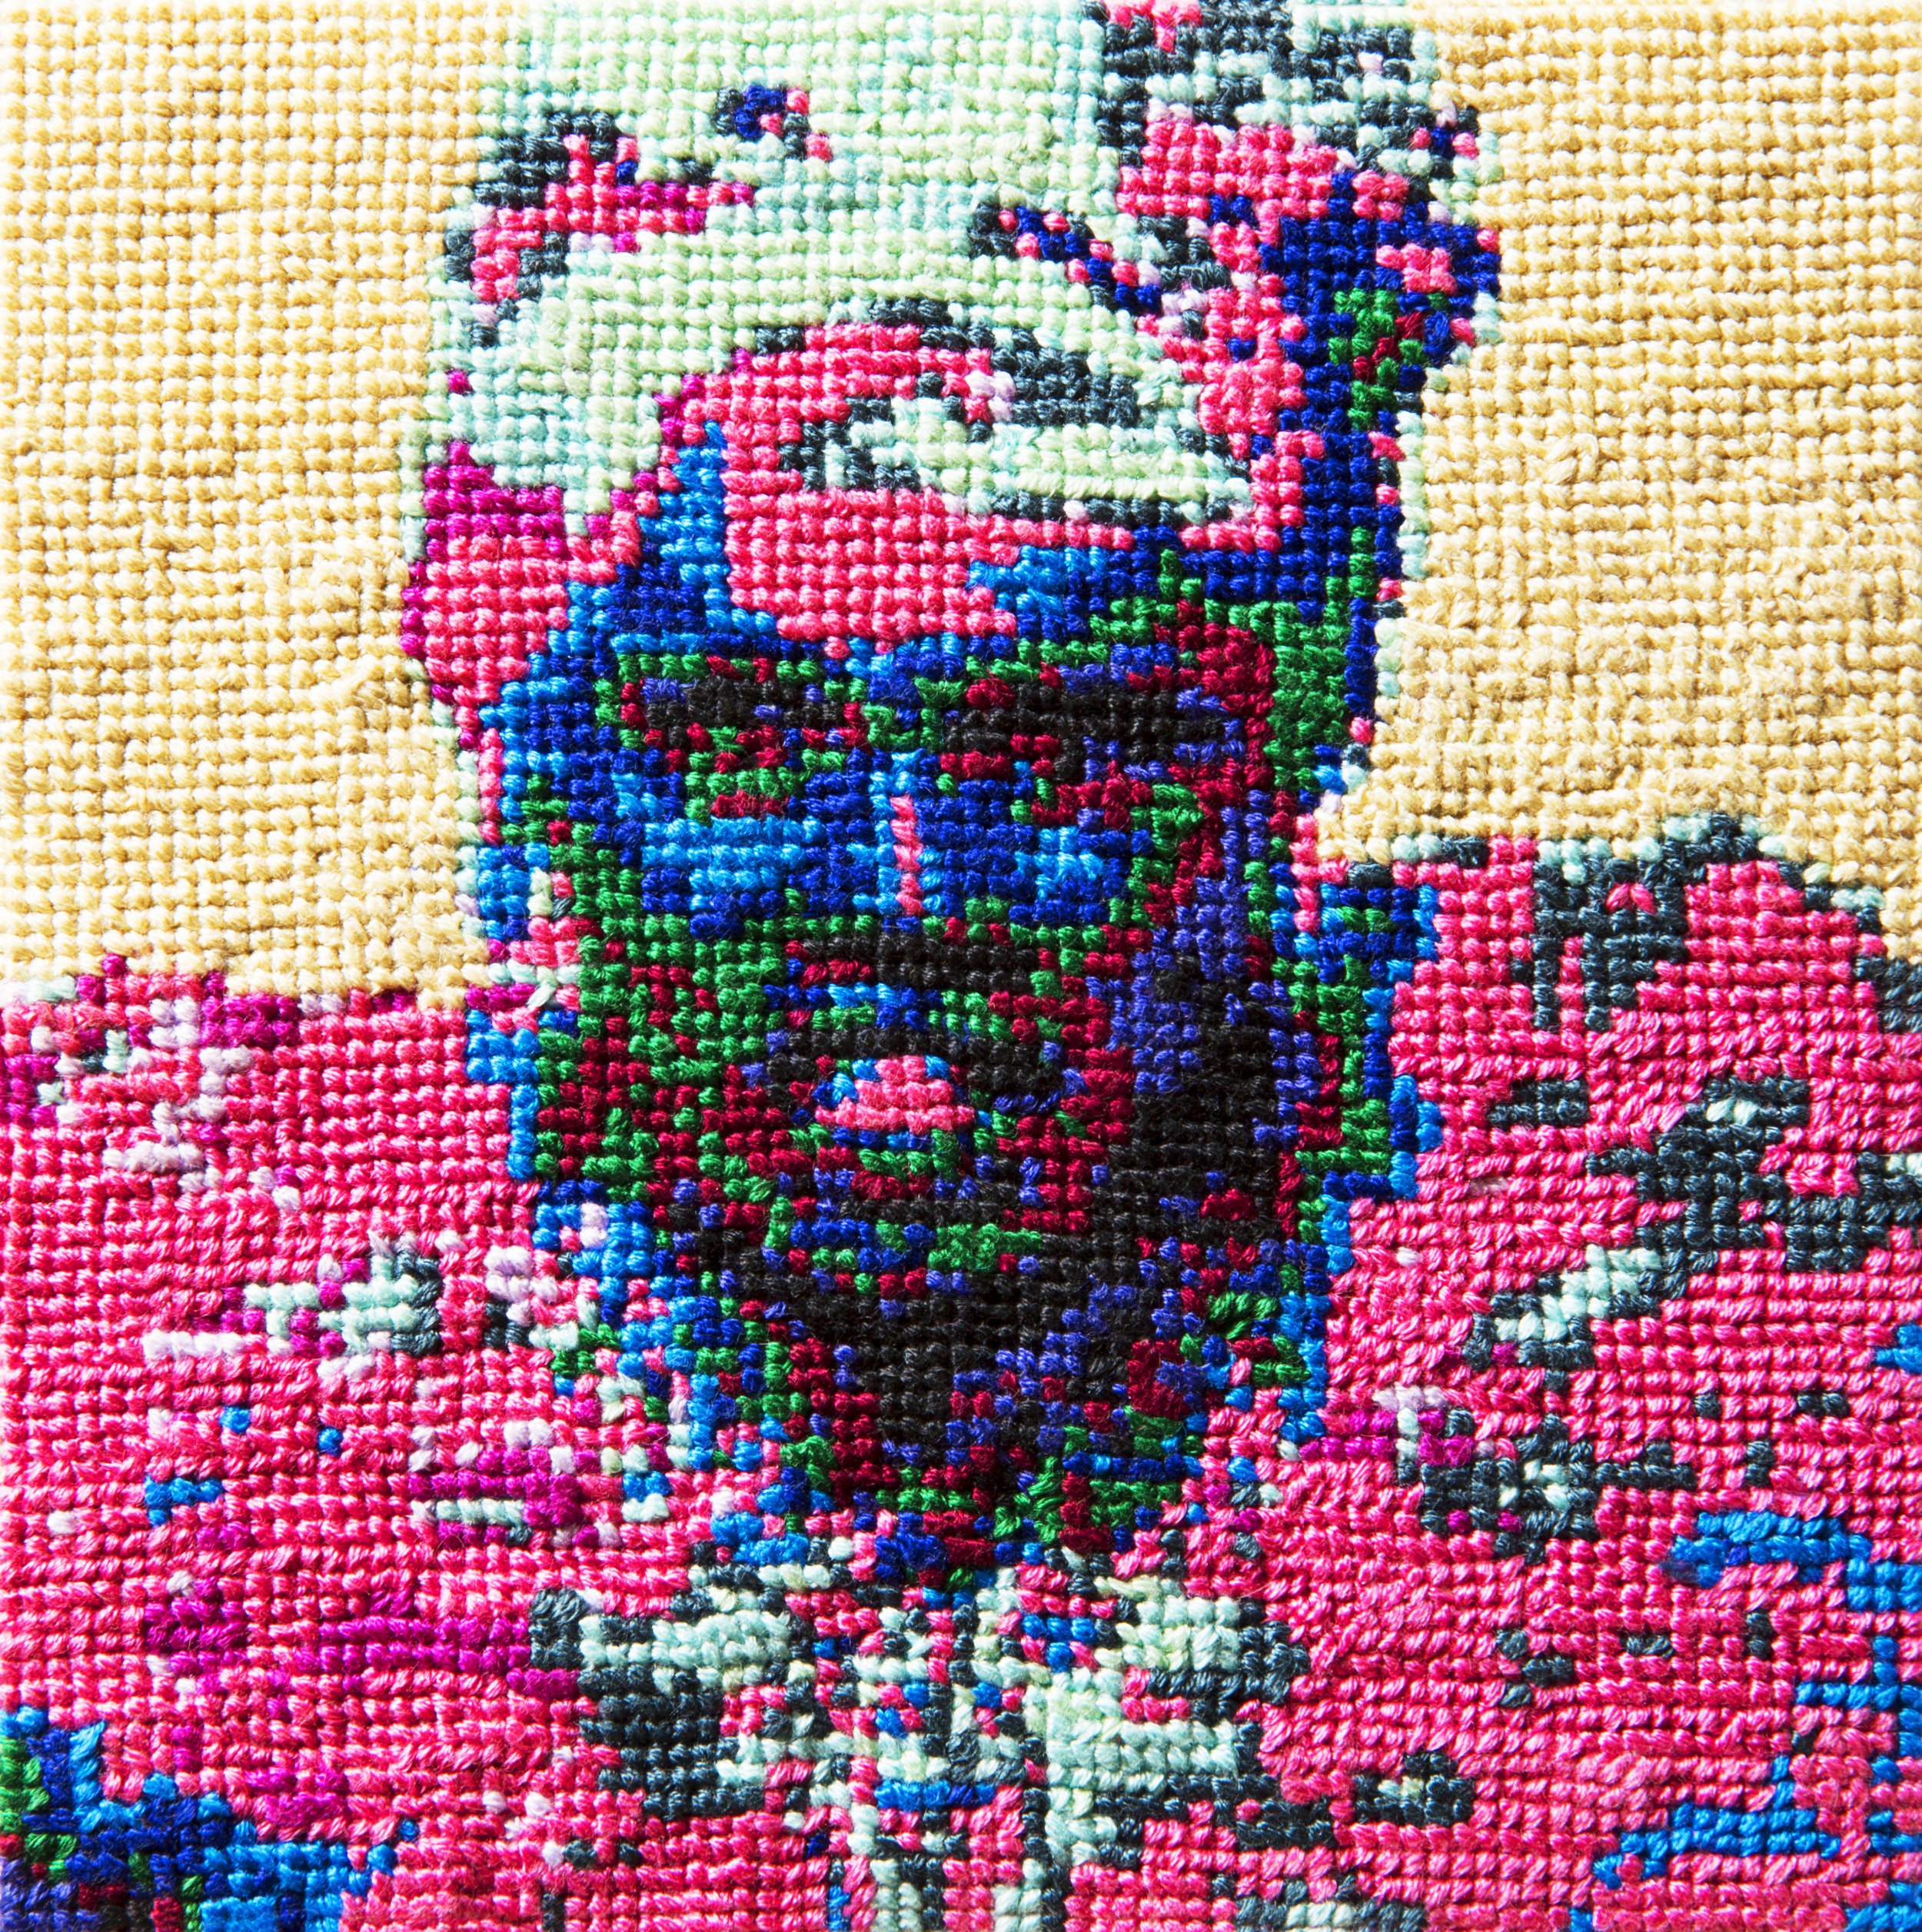   Frame 04   By Kaitlin Commiskey  5 x 5 inches  Cotton thread on aida cloth  2013 